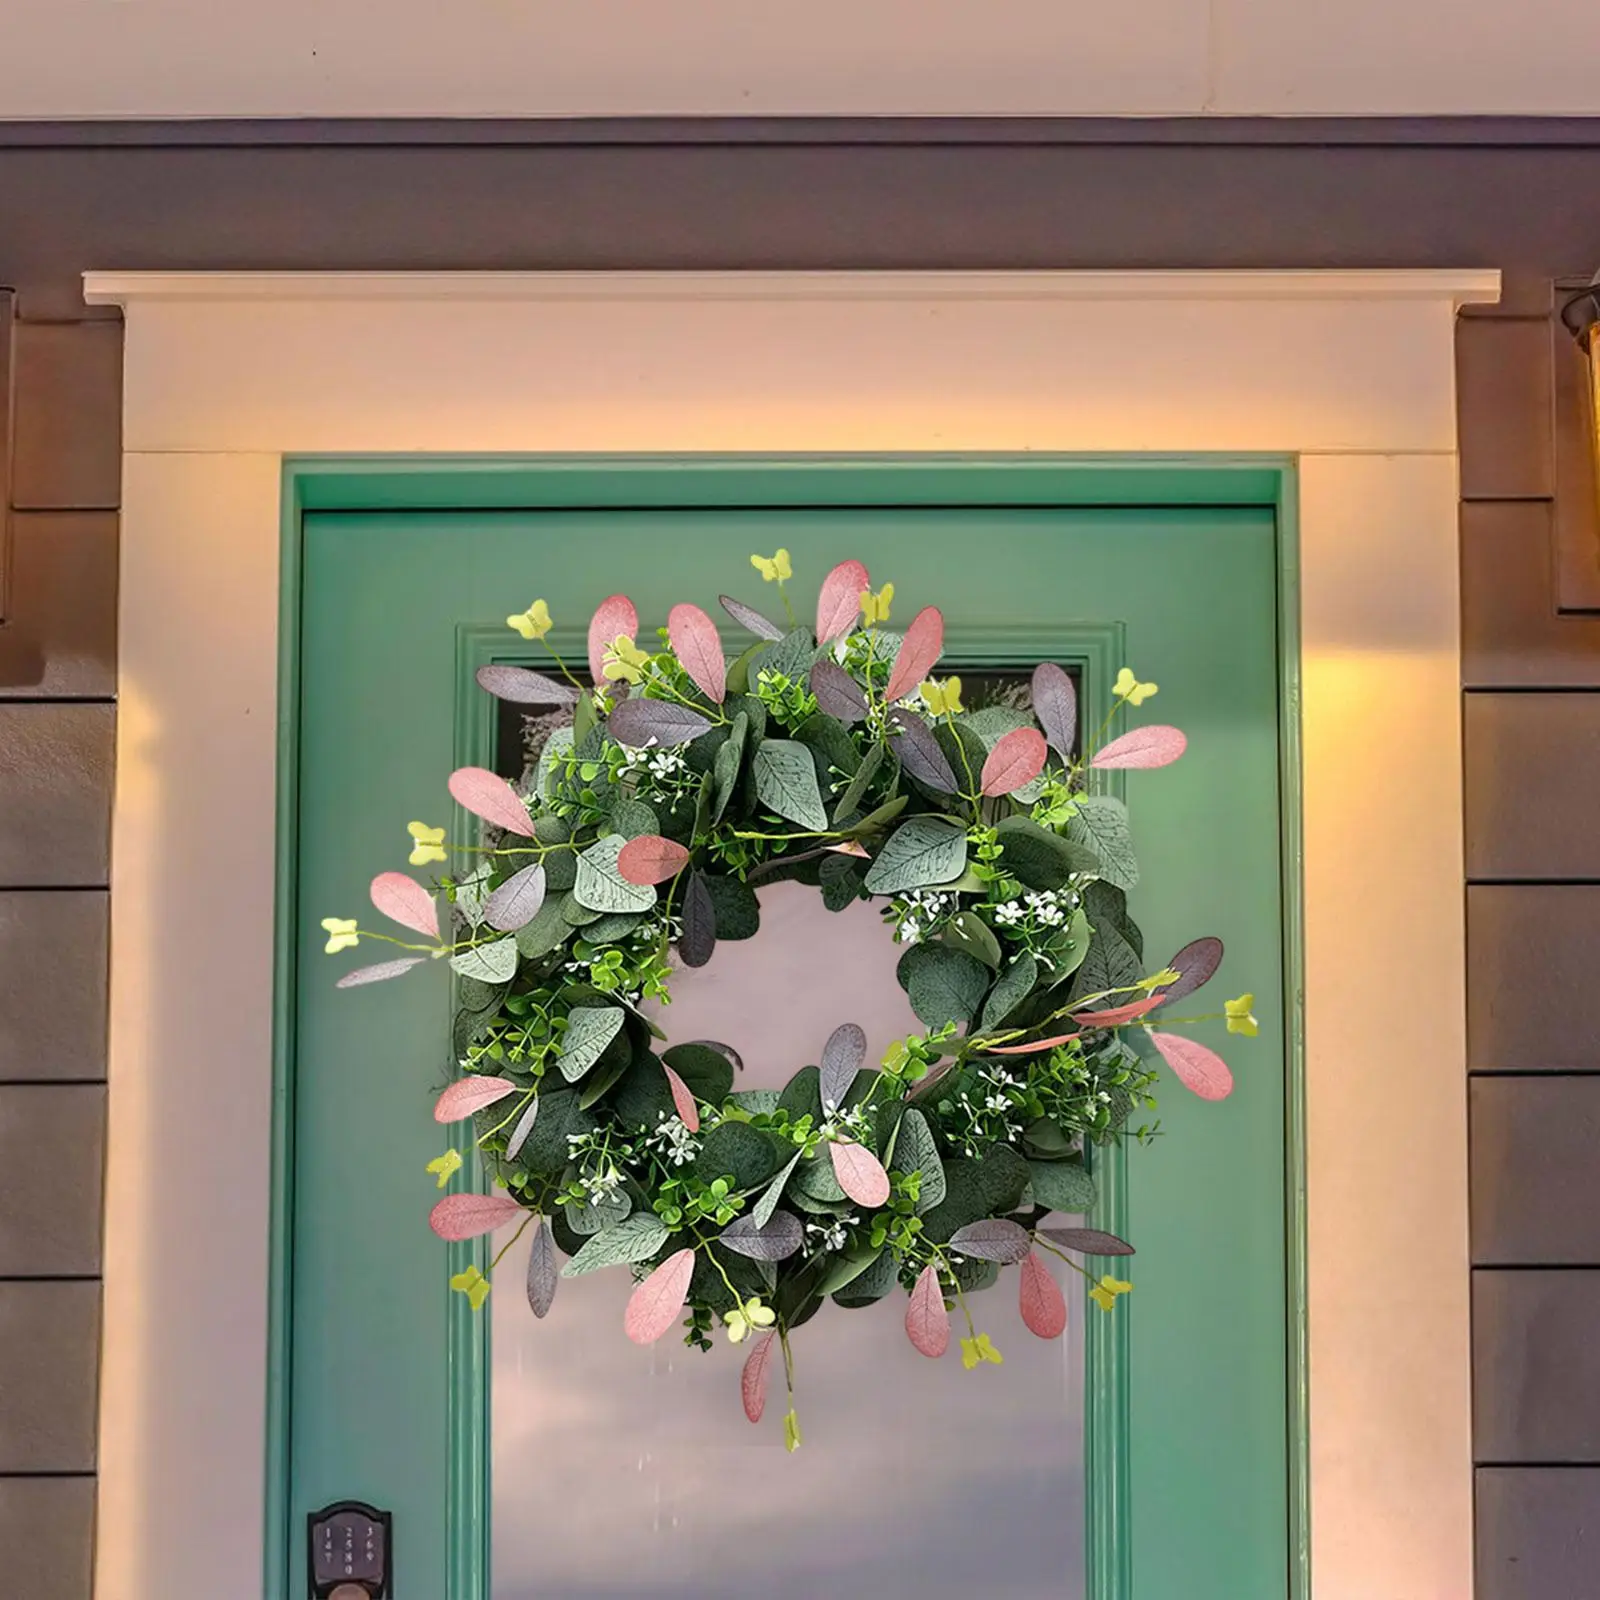 Green Leaf Wreath Ornament Farmhouse Wreaths Artificial Eucalyptus Wreath Greenery Wreath for Garden Door Wedding Windows Walls